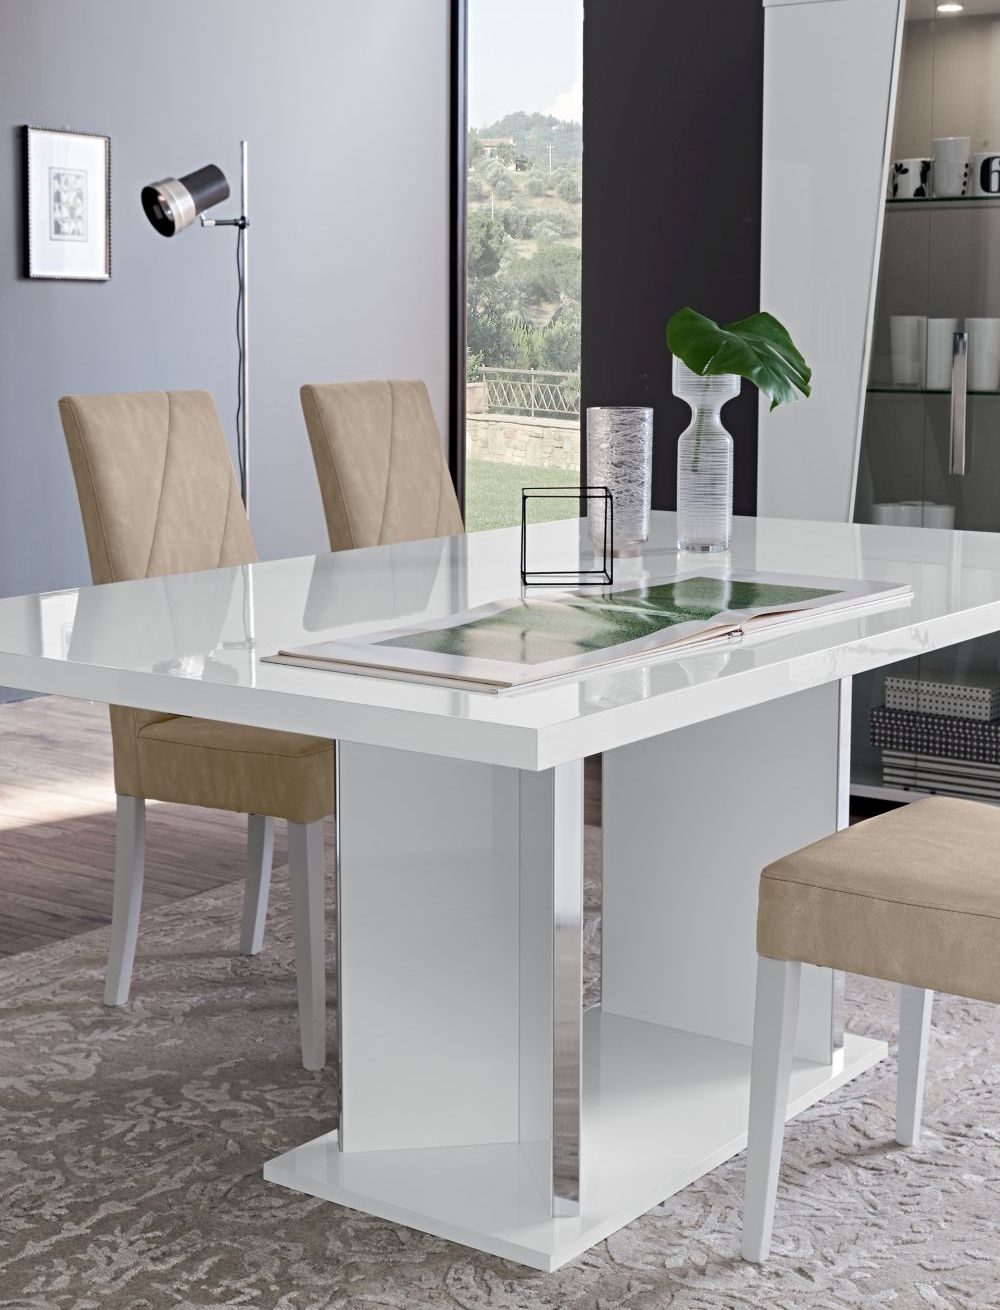 Status Lisa Day White High Gloss Italian Dining Table, 180cm Seats 6 Diners Rectangular Top